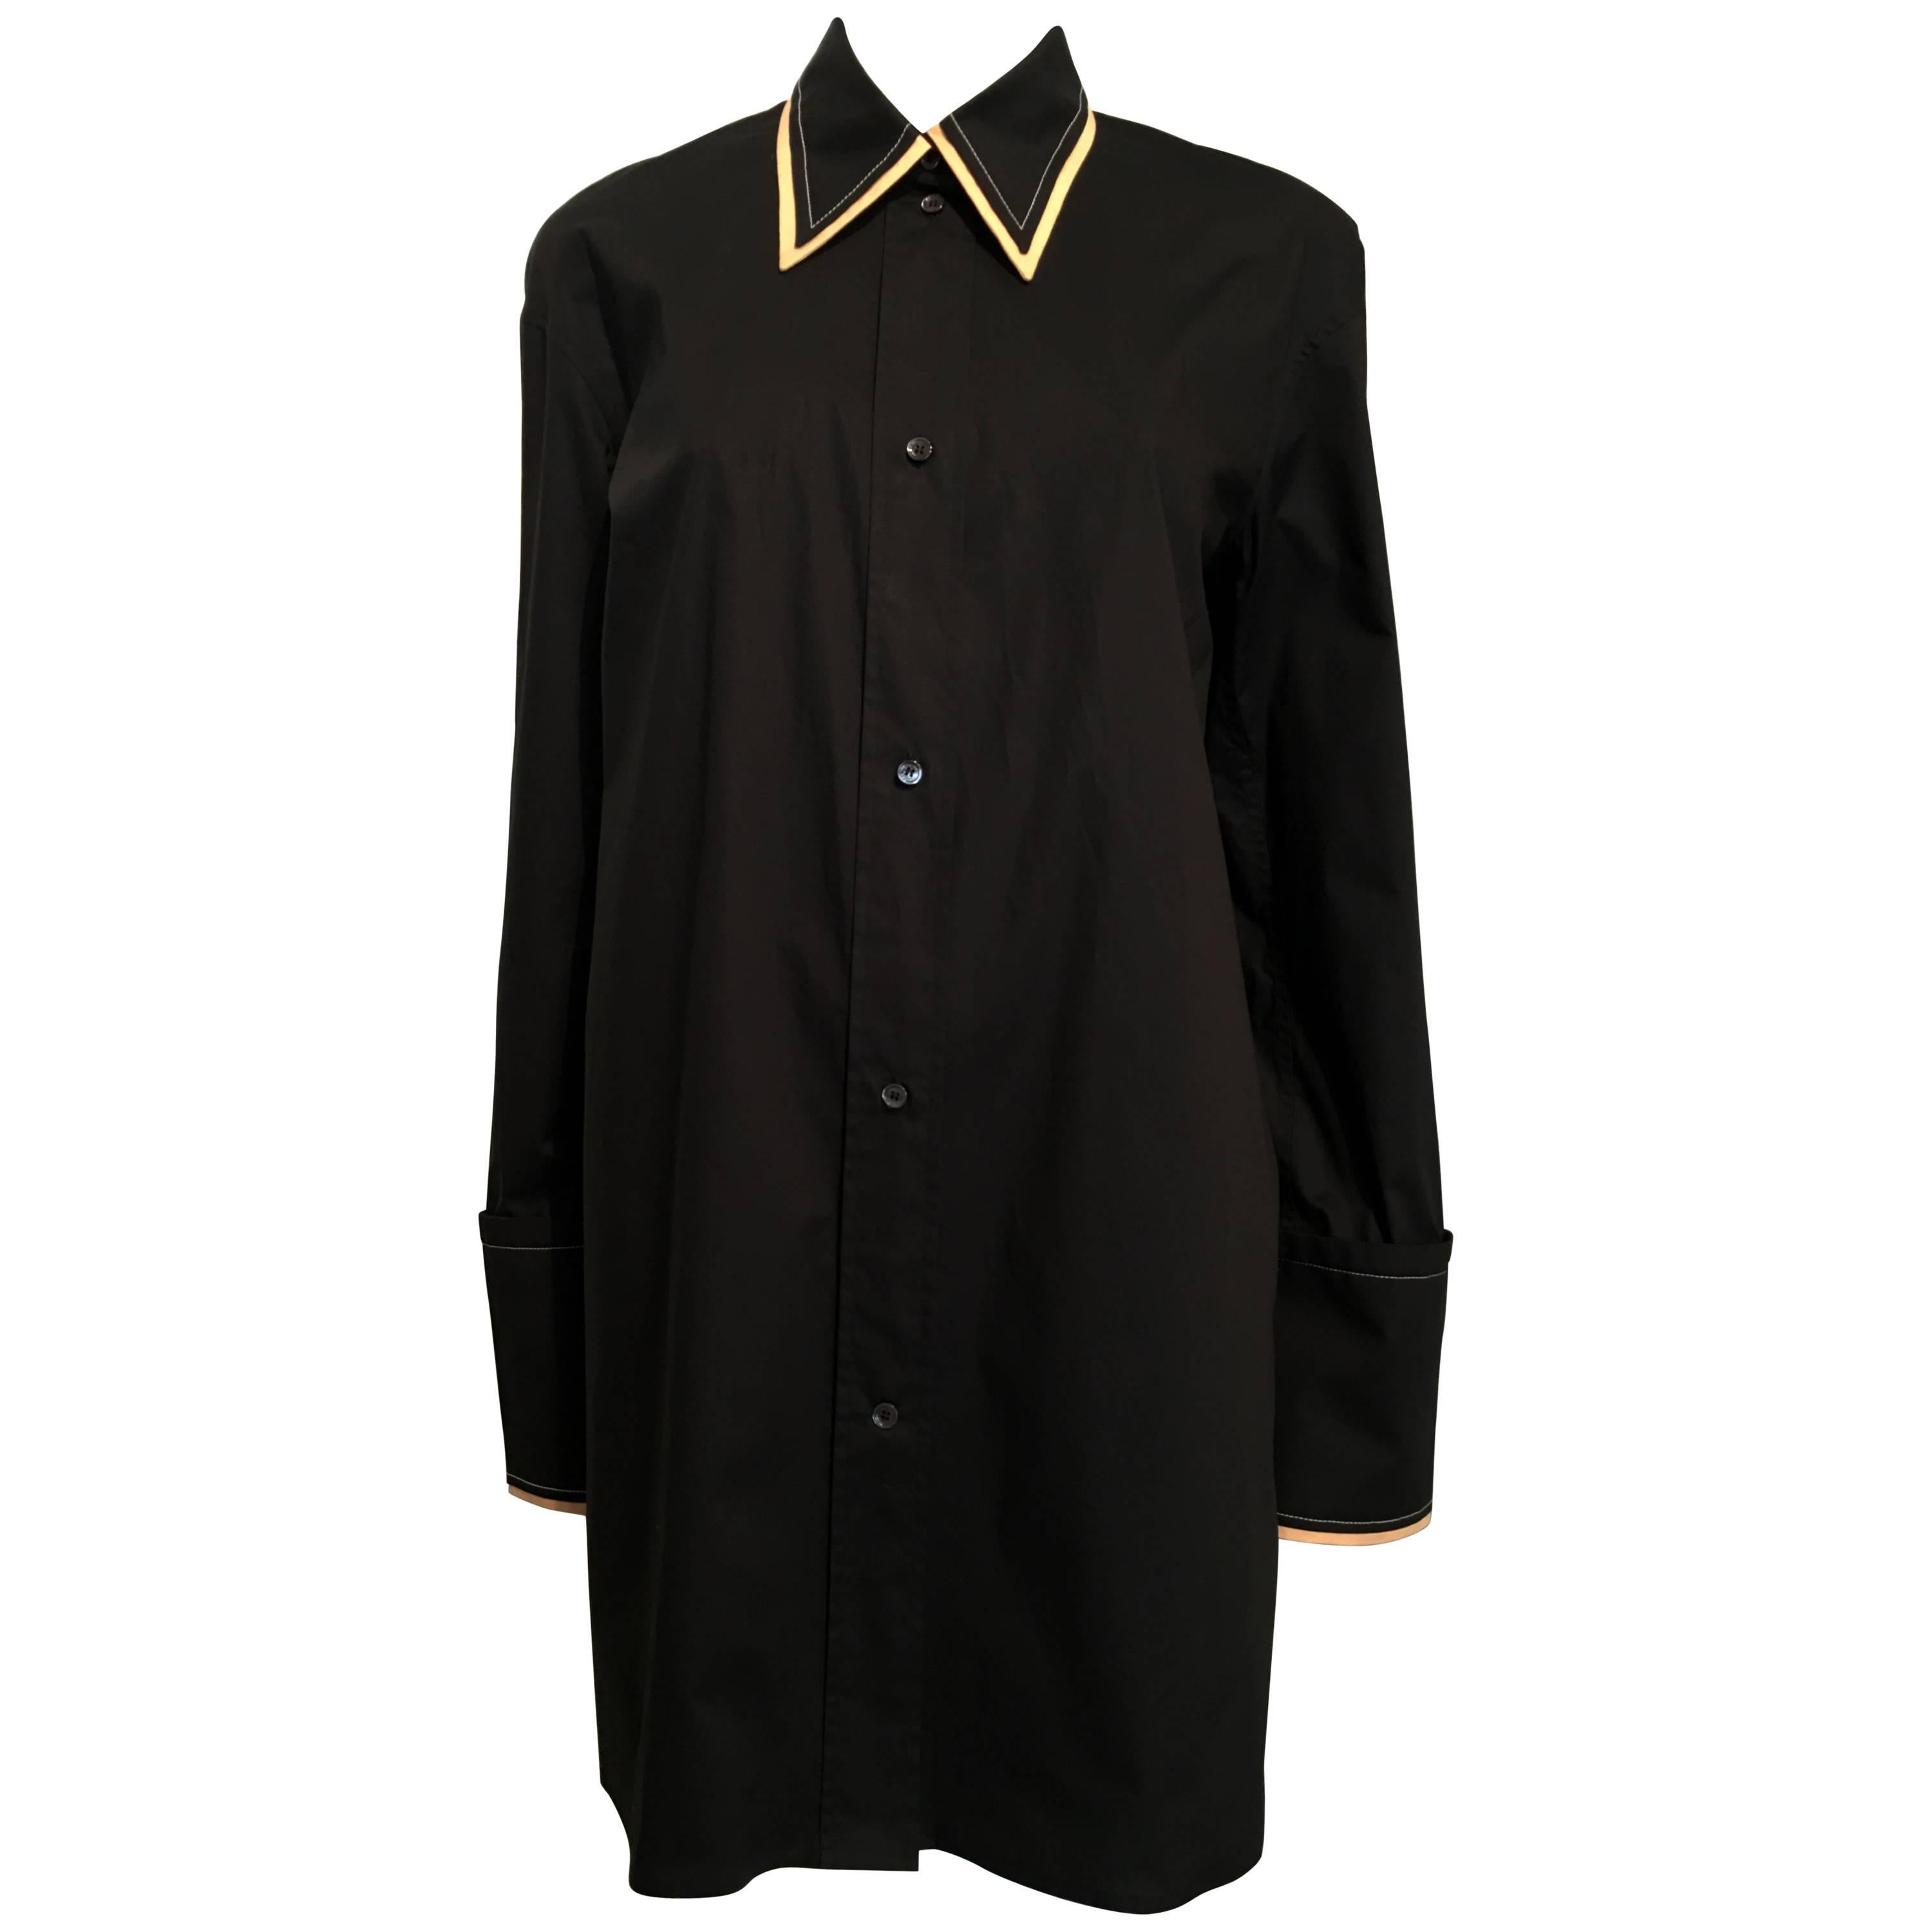 Celine Black Oversize Shirt Sz38 US 6, Fall 2016